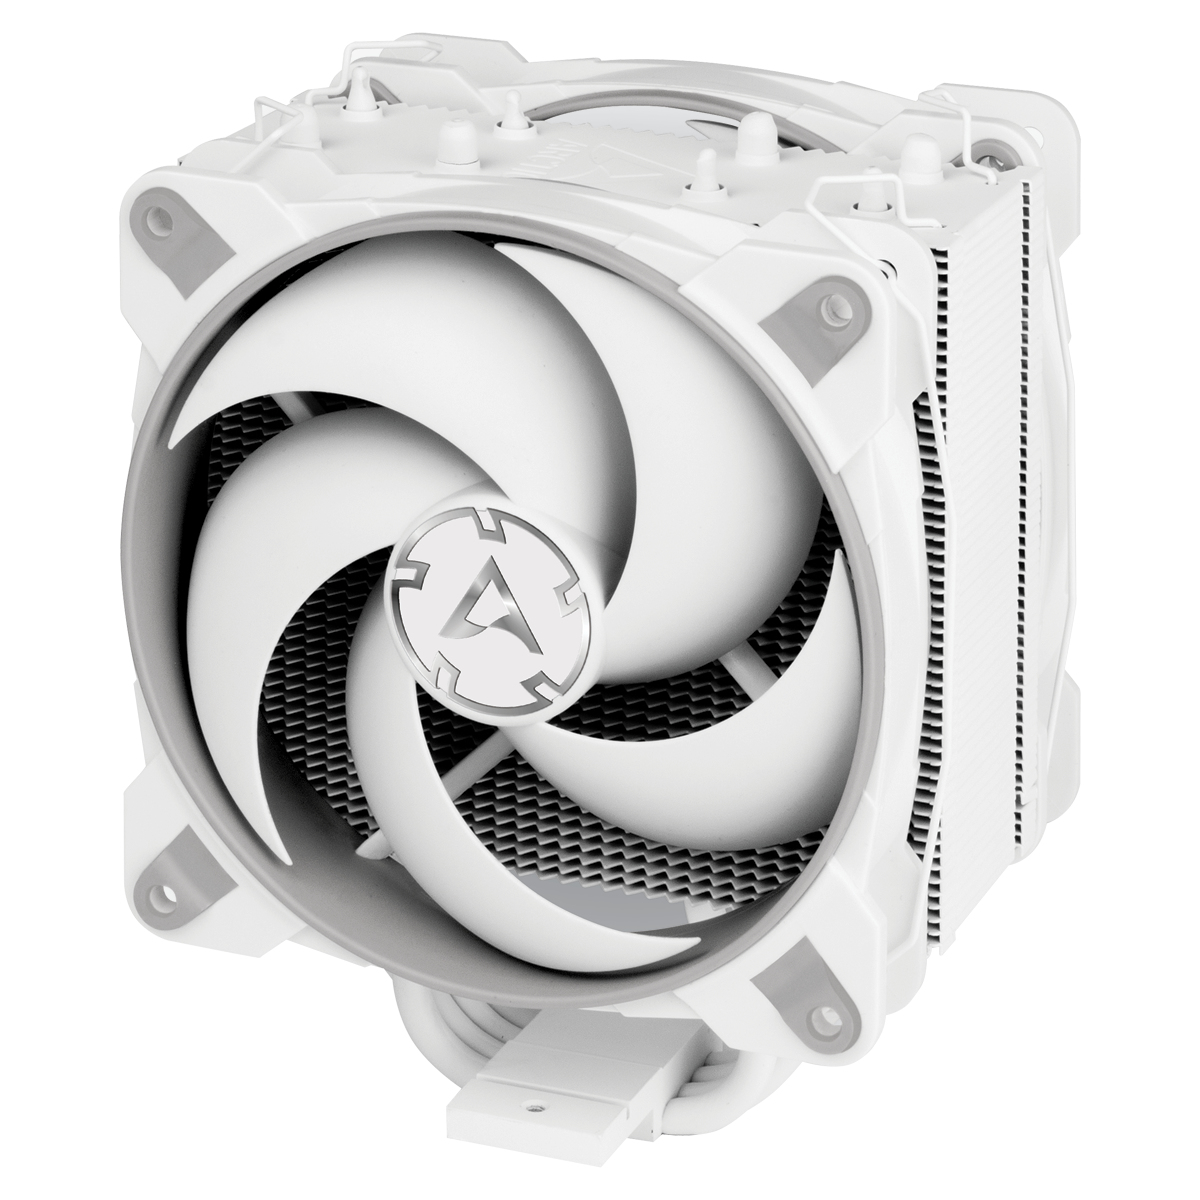 Kühler ARCTIC Freezer 34 eSports DUO - Grey/White